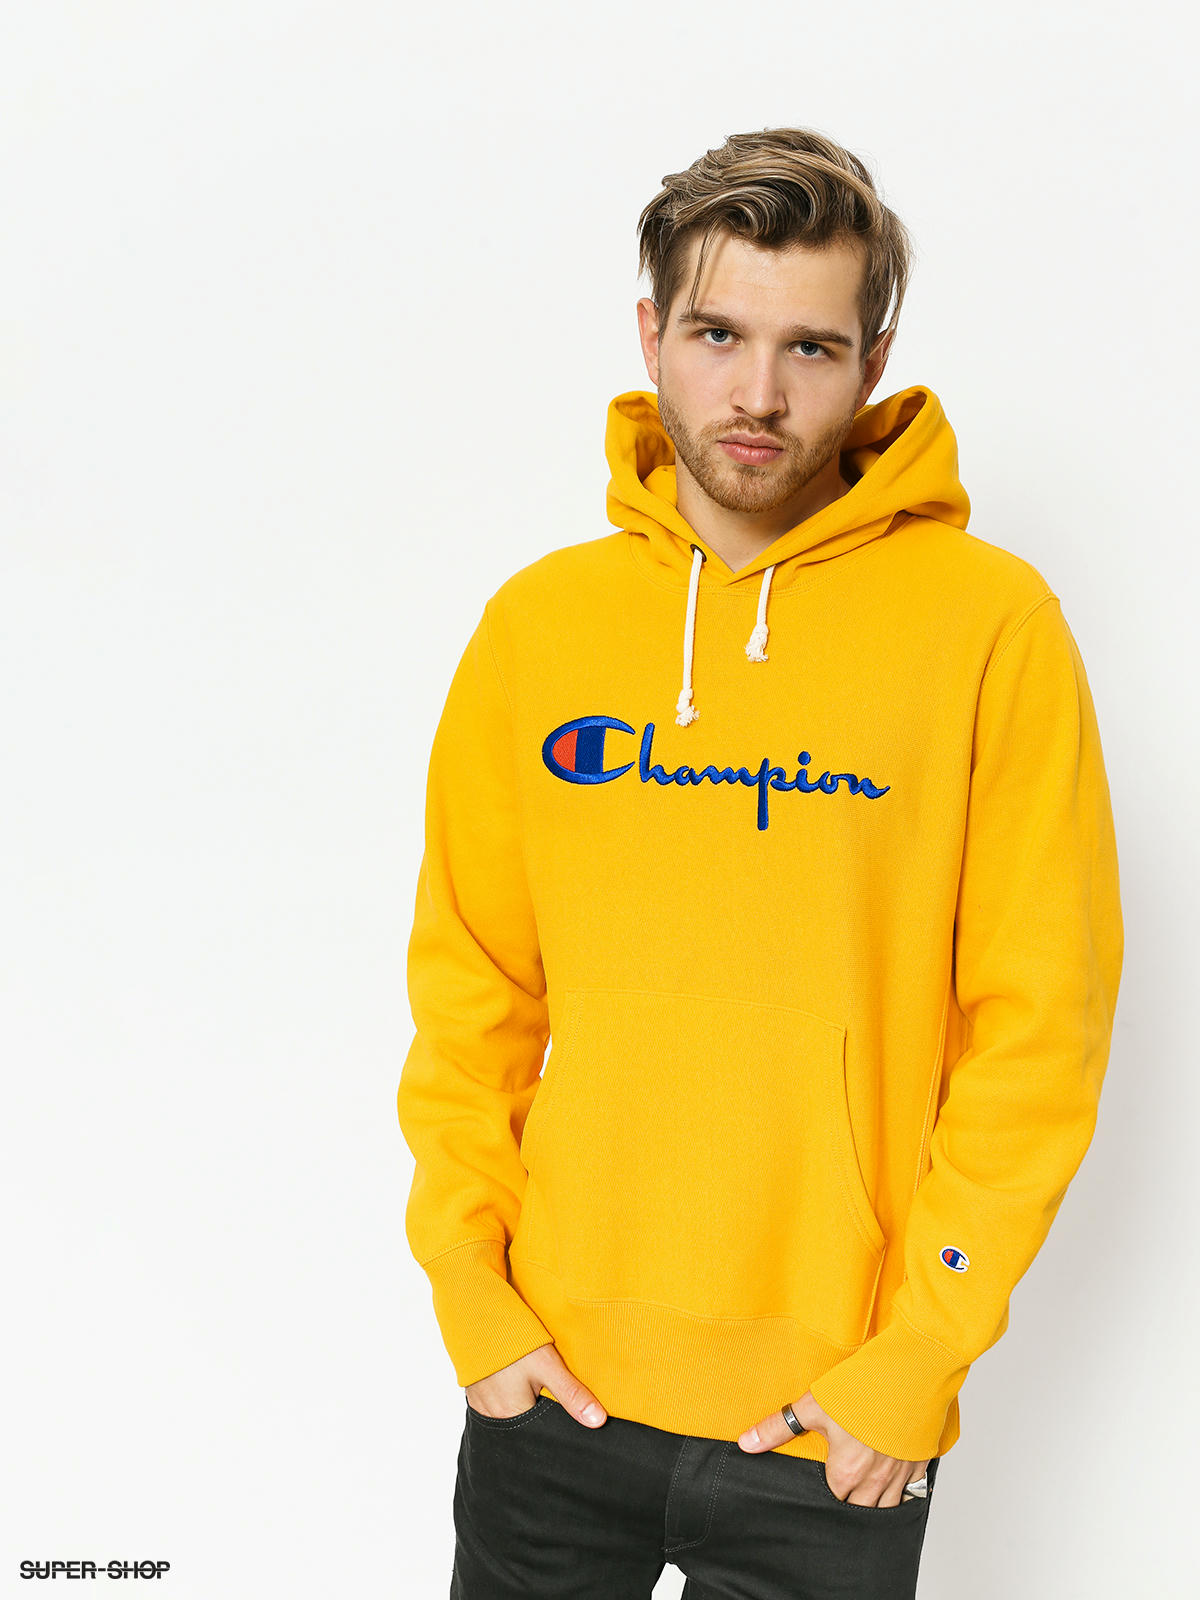 Champion Hooded Sweatshirt Yellow Flash Sales, TO 53% OFF www.operaactual.com